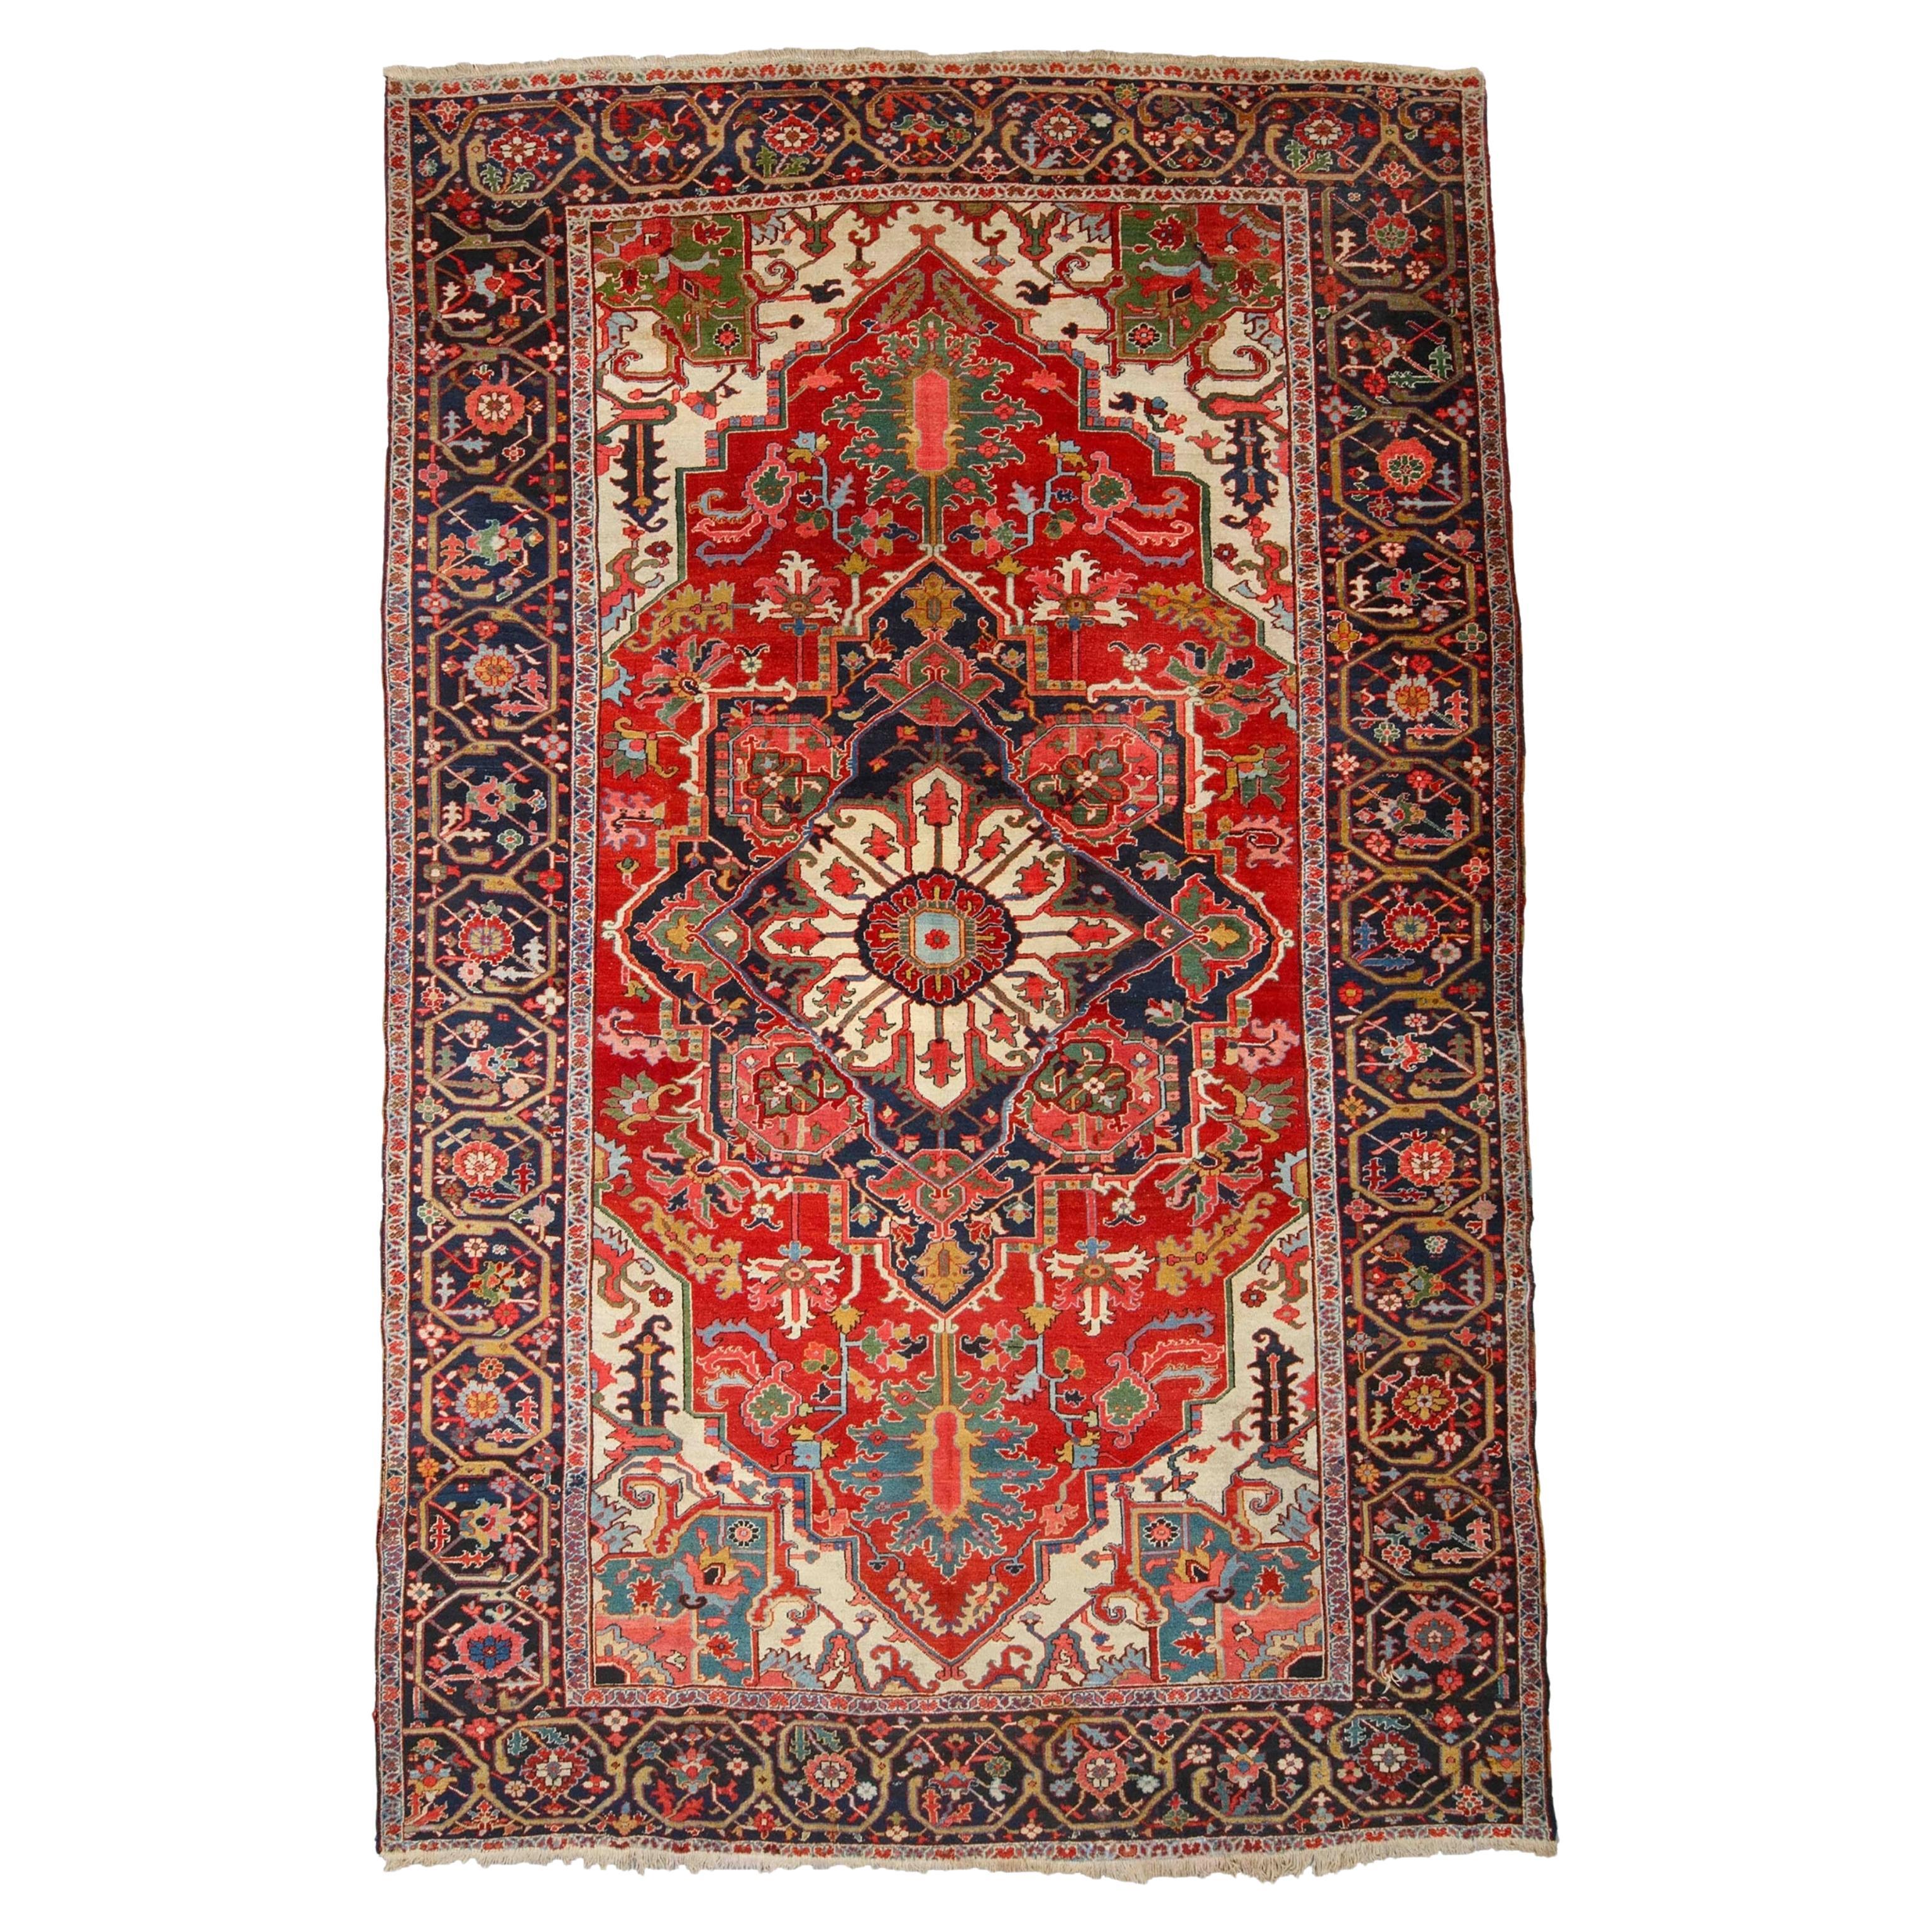 Antique Serapi Carpet - 19th Century Serapi Carpet, Antique Rug For Sale